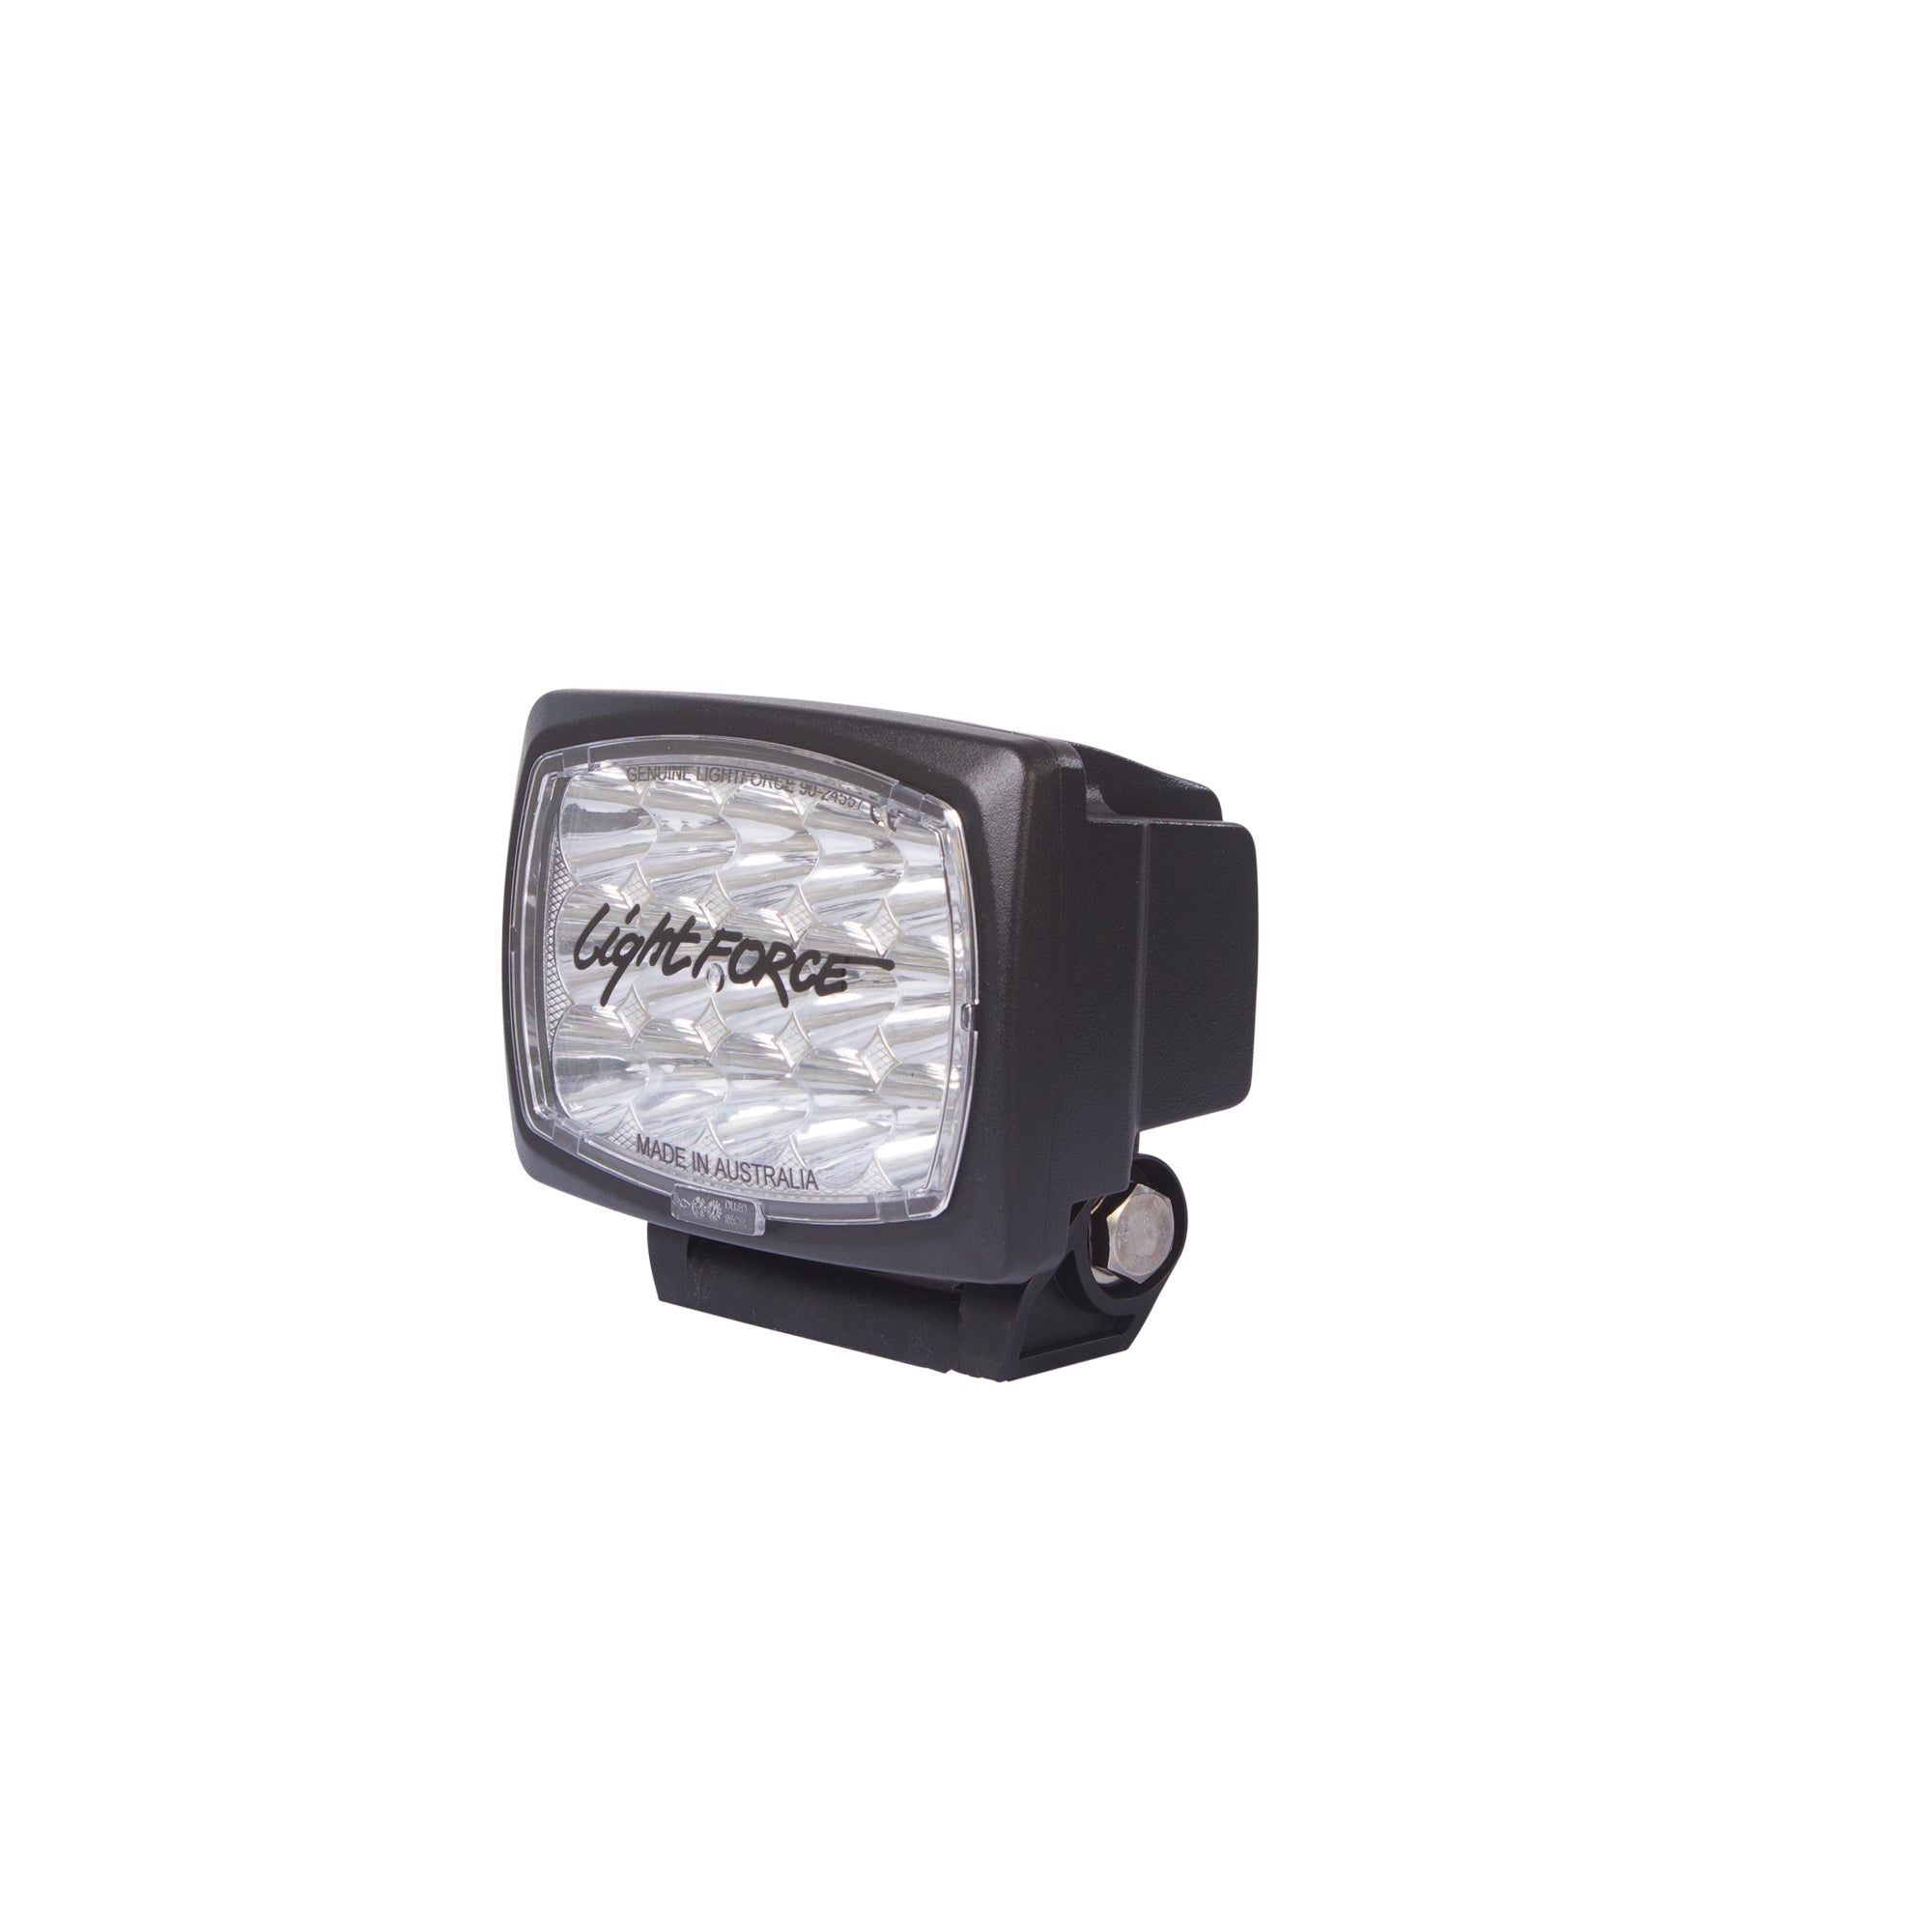 Striker Professional Edition LED Driving Light